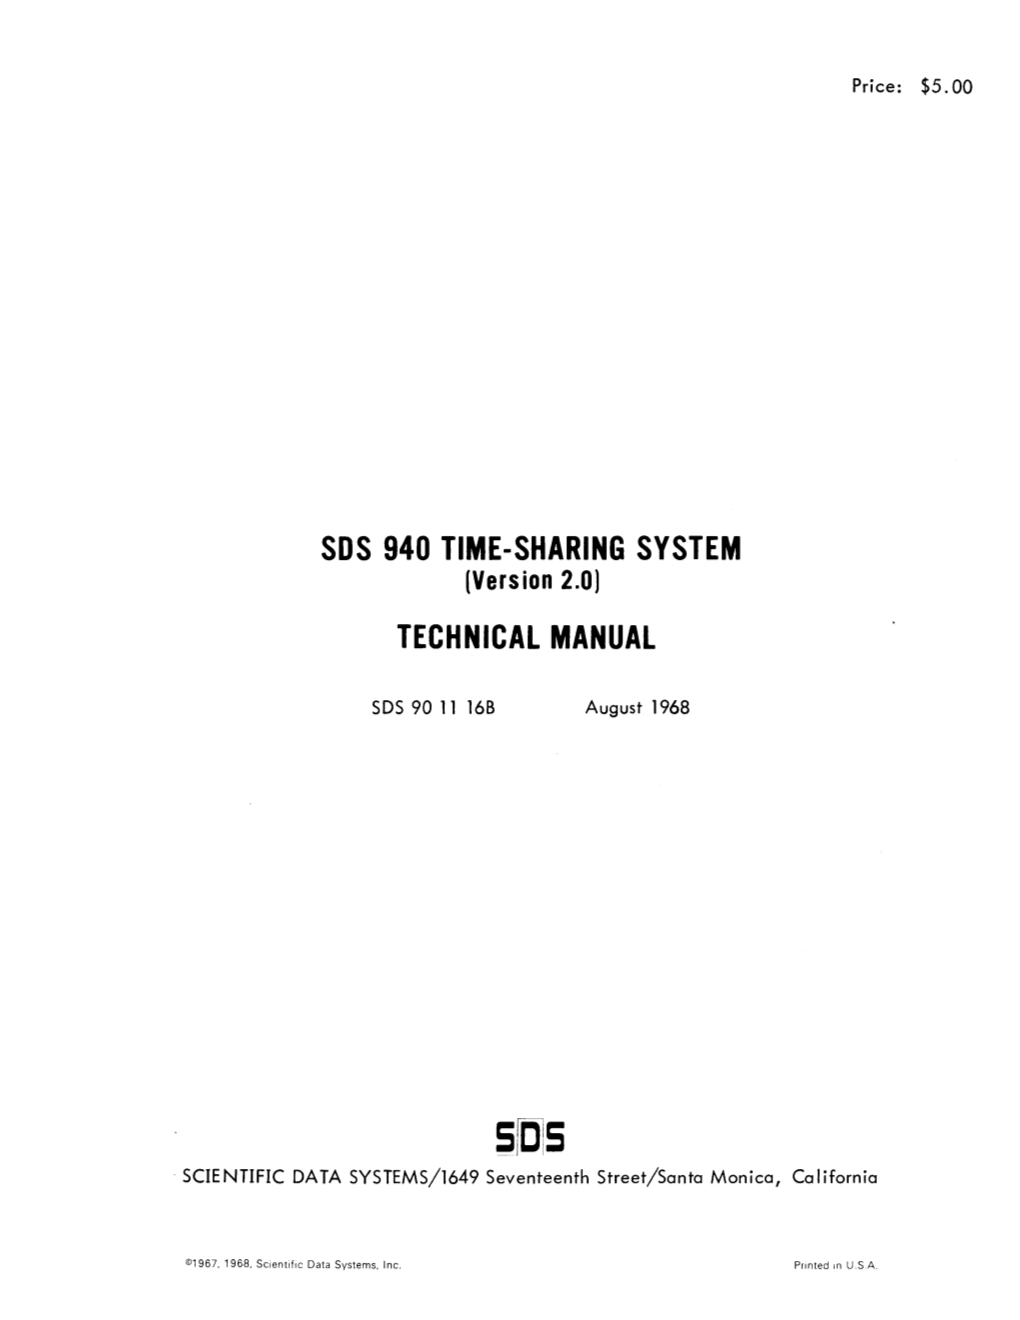 SDS 940 Time-Sharing System (Version 2.0)